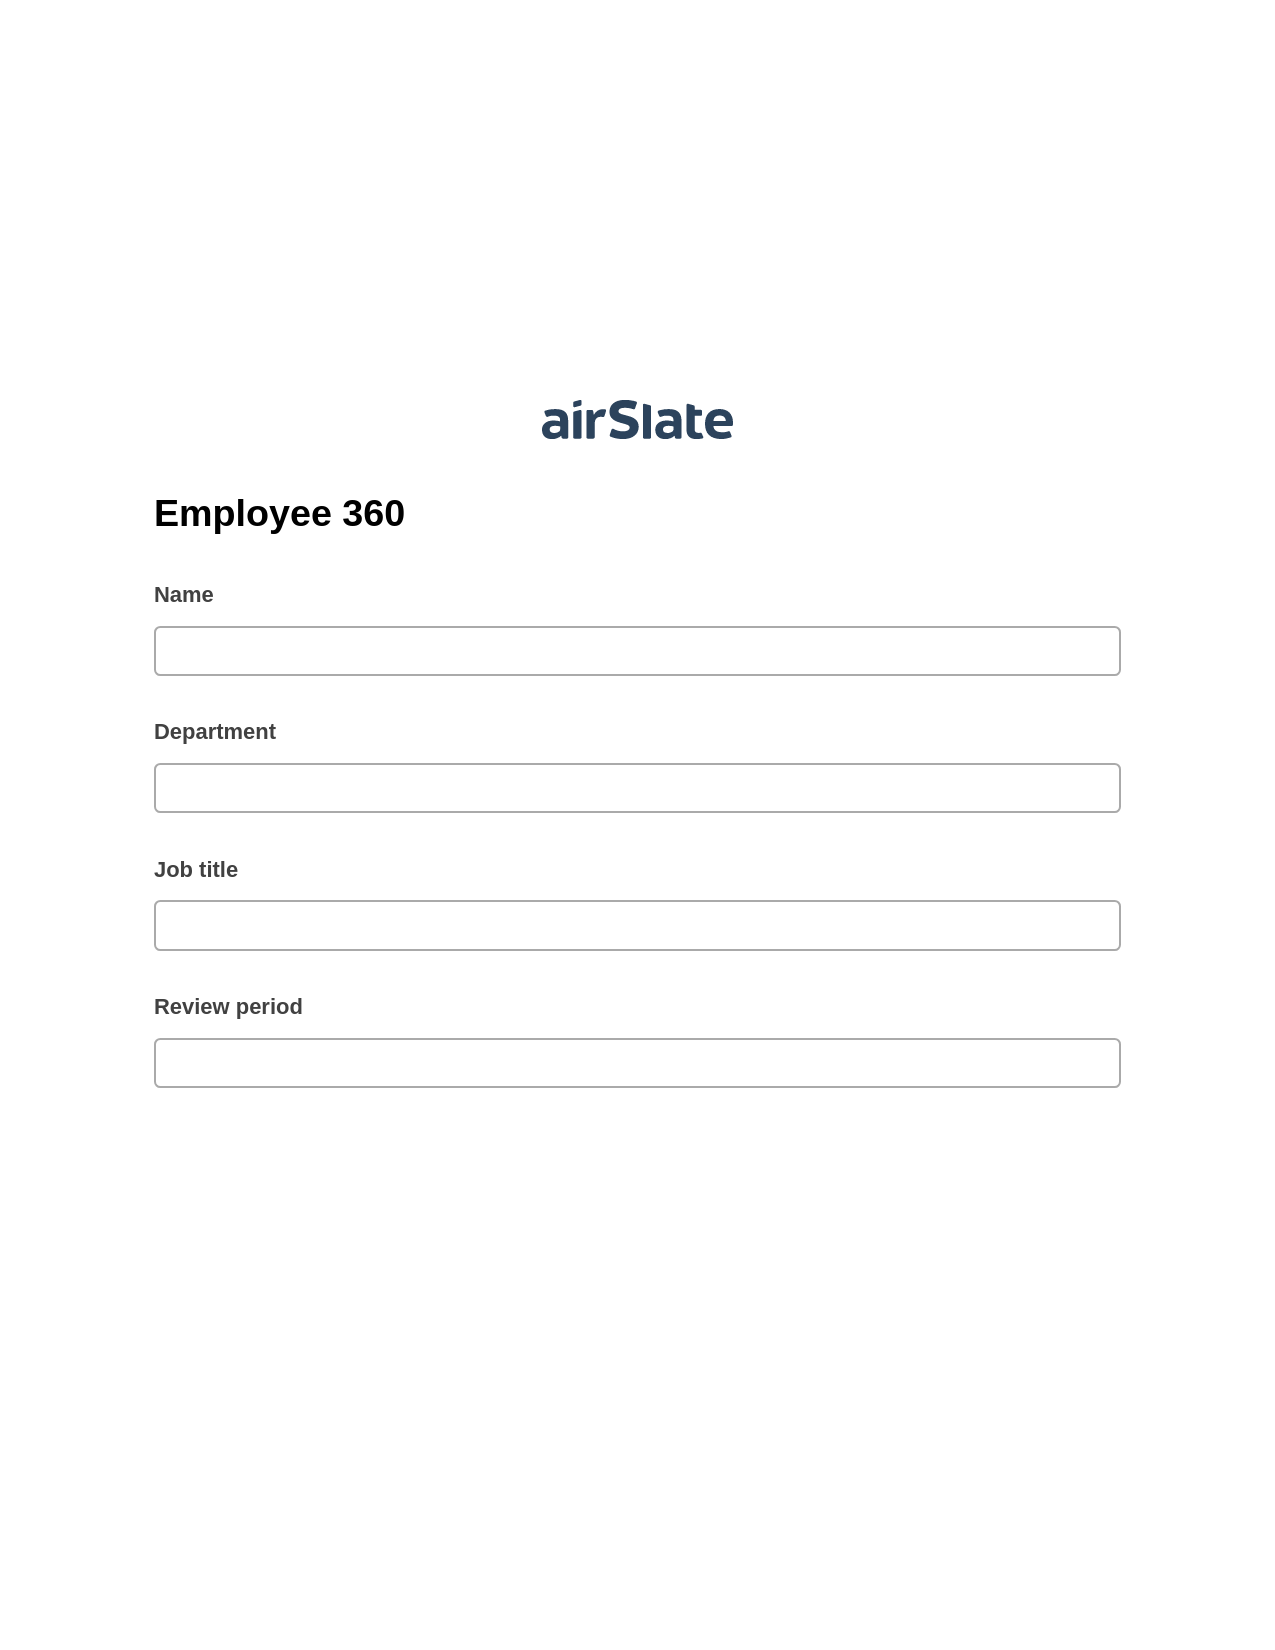 Employee 360 Pre-fill from MySQL Bot, Lock the Slate Bot, Archive to Dropbox Bot